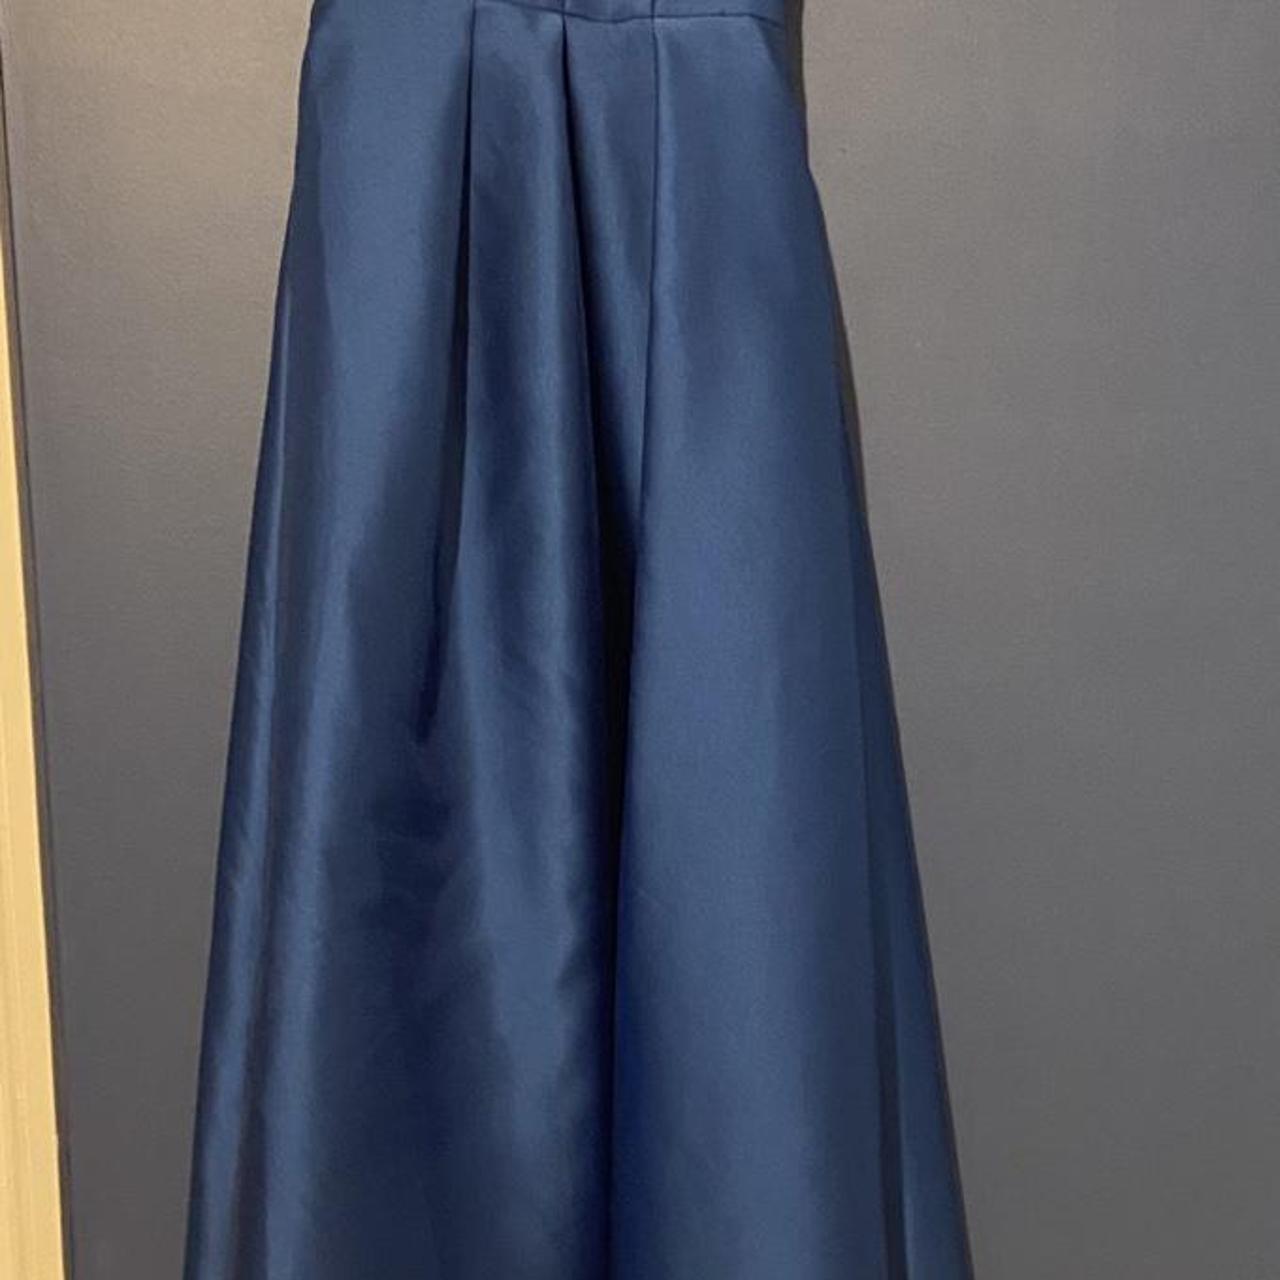 Beautiful blue satin strapless dress. Worn once for... - Depop